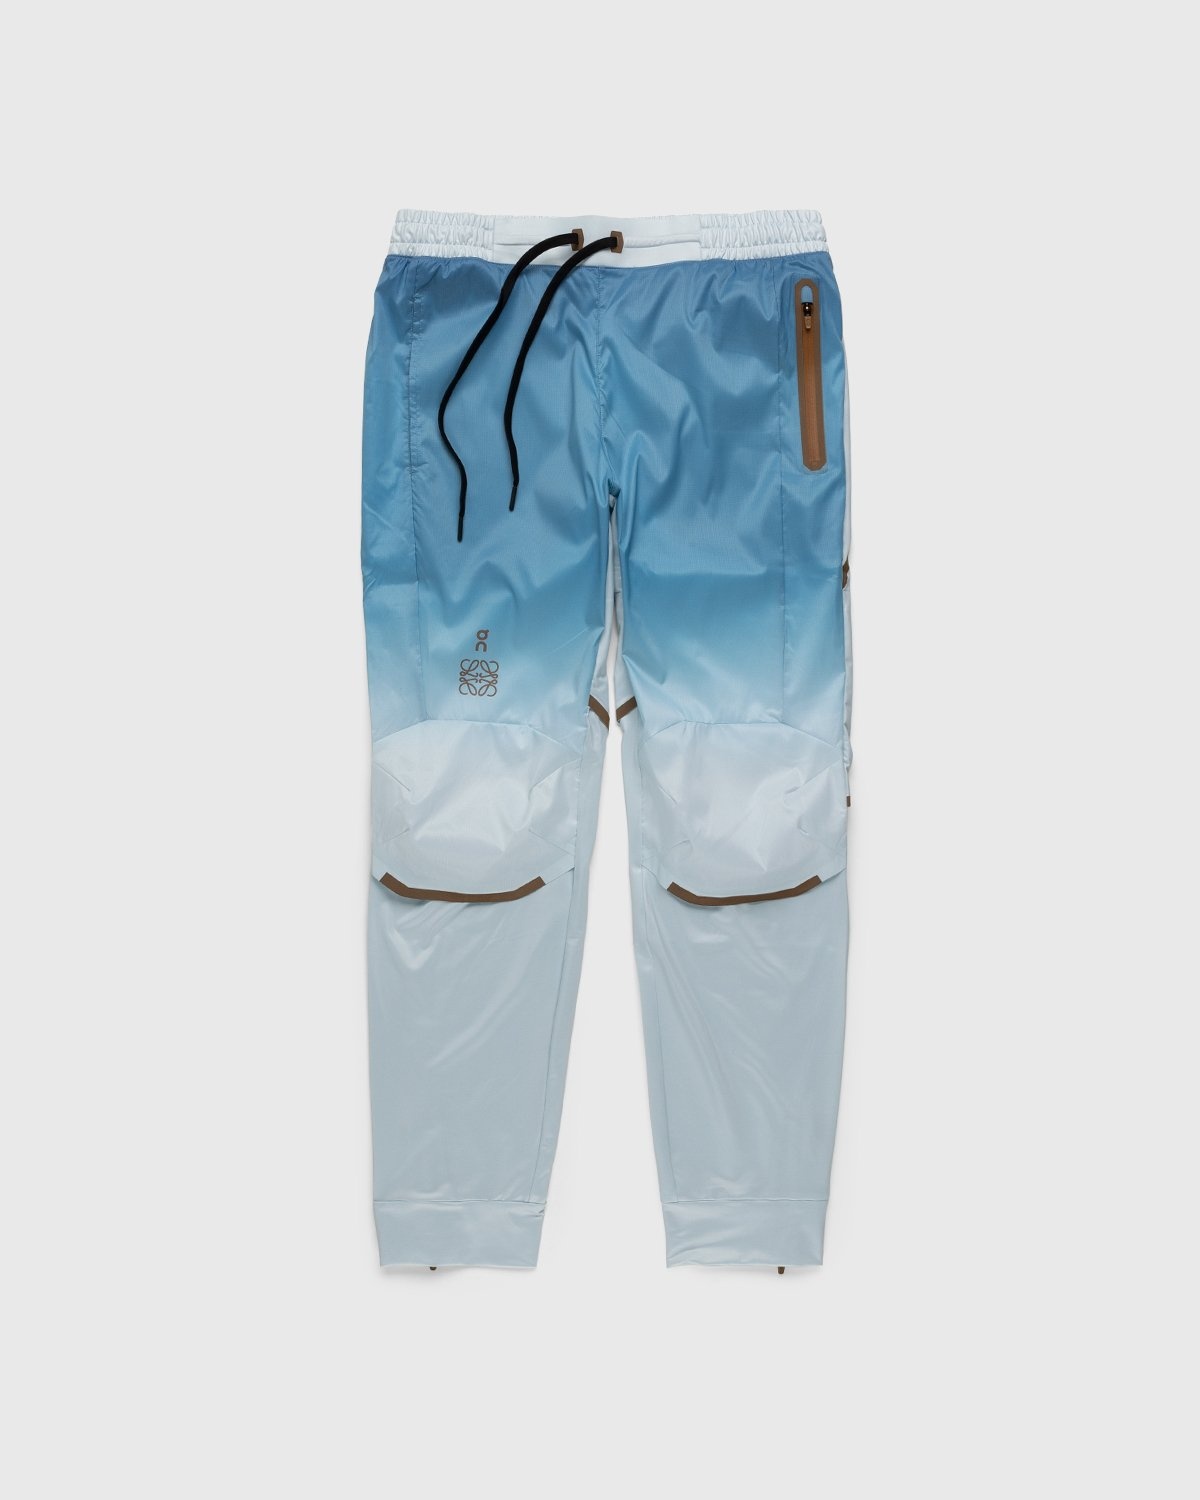 Loewe x On – Men's Technical Running Pants Gradient Grey - Pants - Blue - Image 1